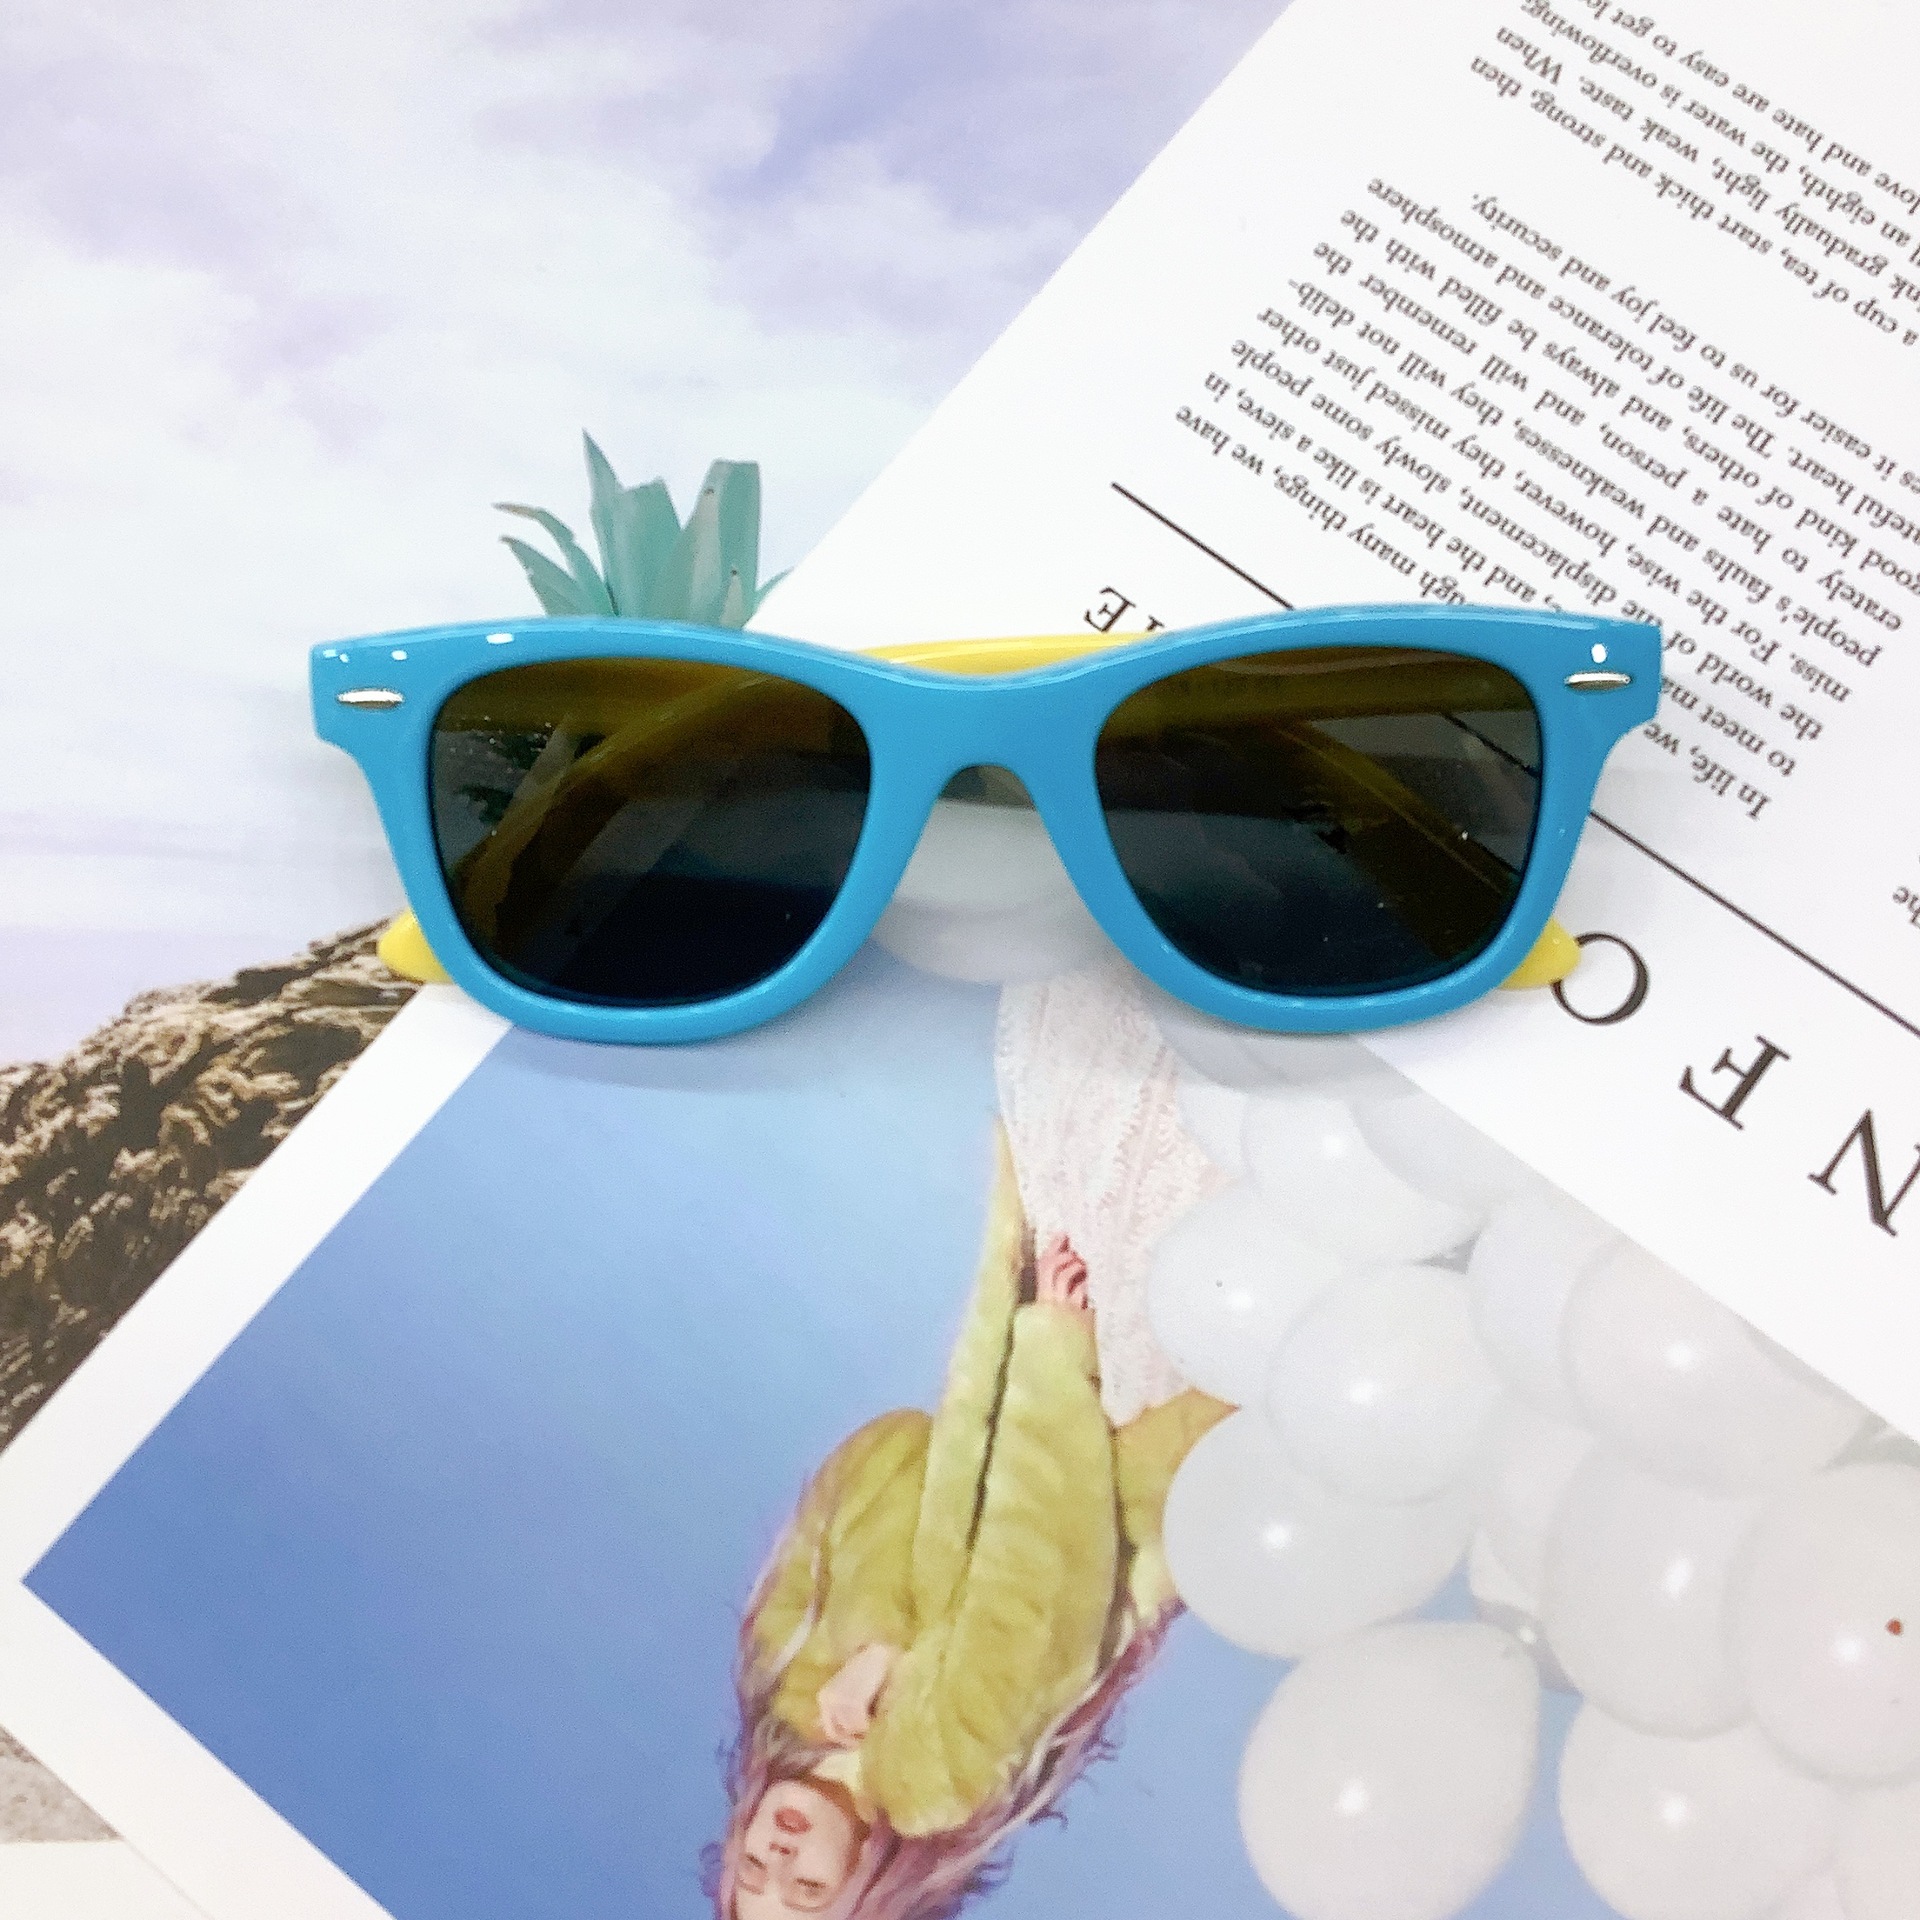 Fashion Kids Sunglasses Silicone Soft Frame Polarized Kids' Sunglasses Travel Anti-Glare Eye Protection UV Protection Sunglasses